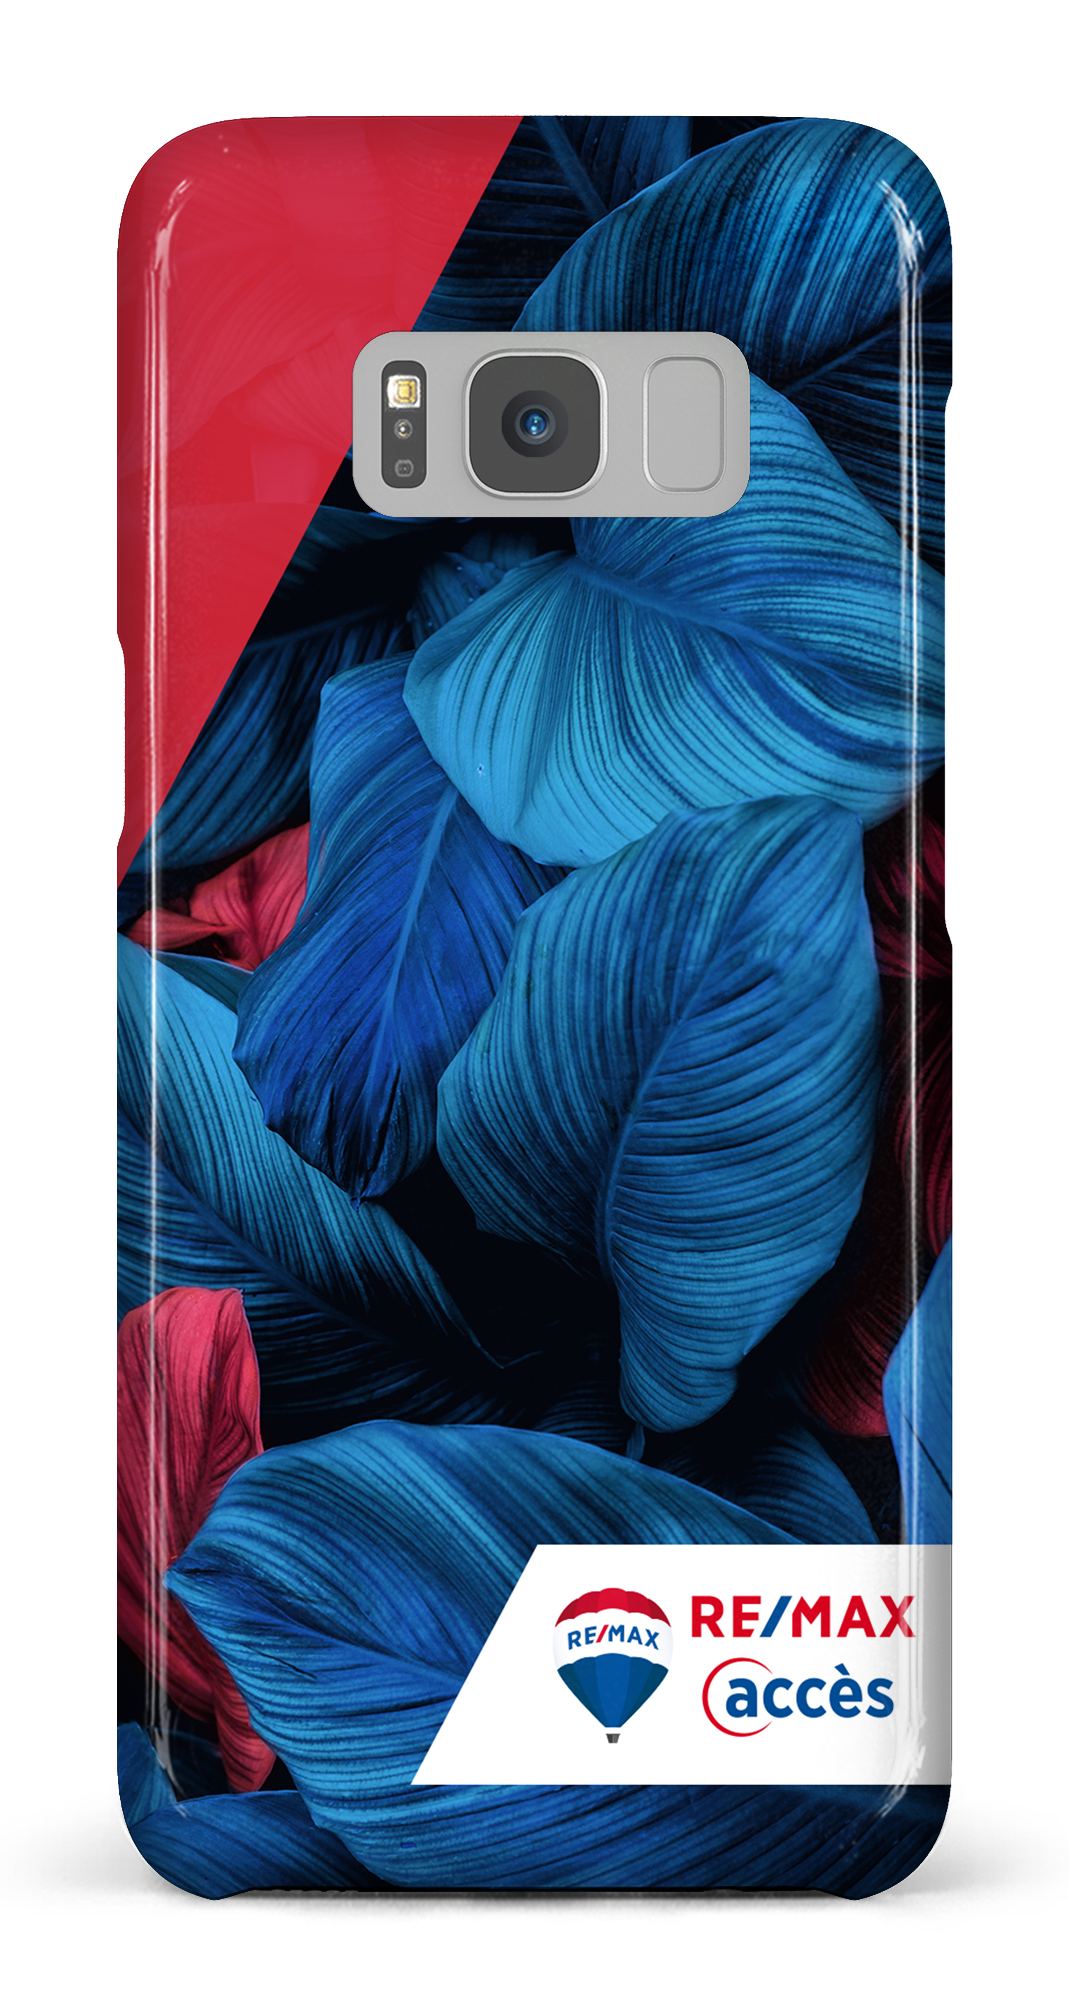 Végétation bicolore - Galaxy S8